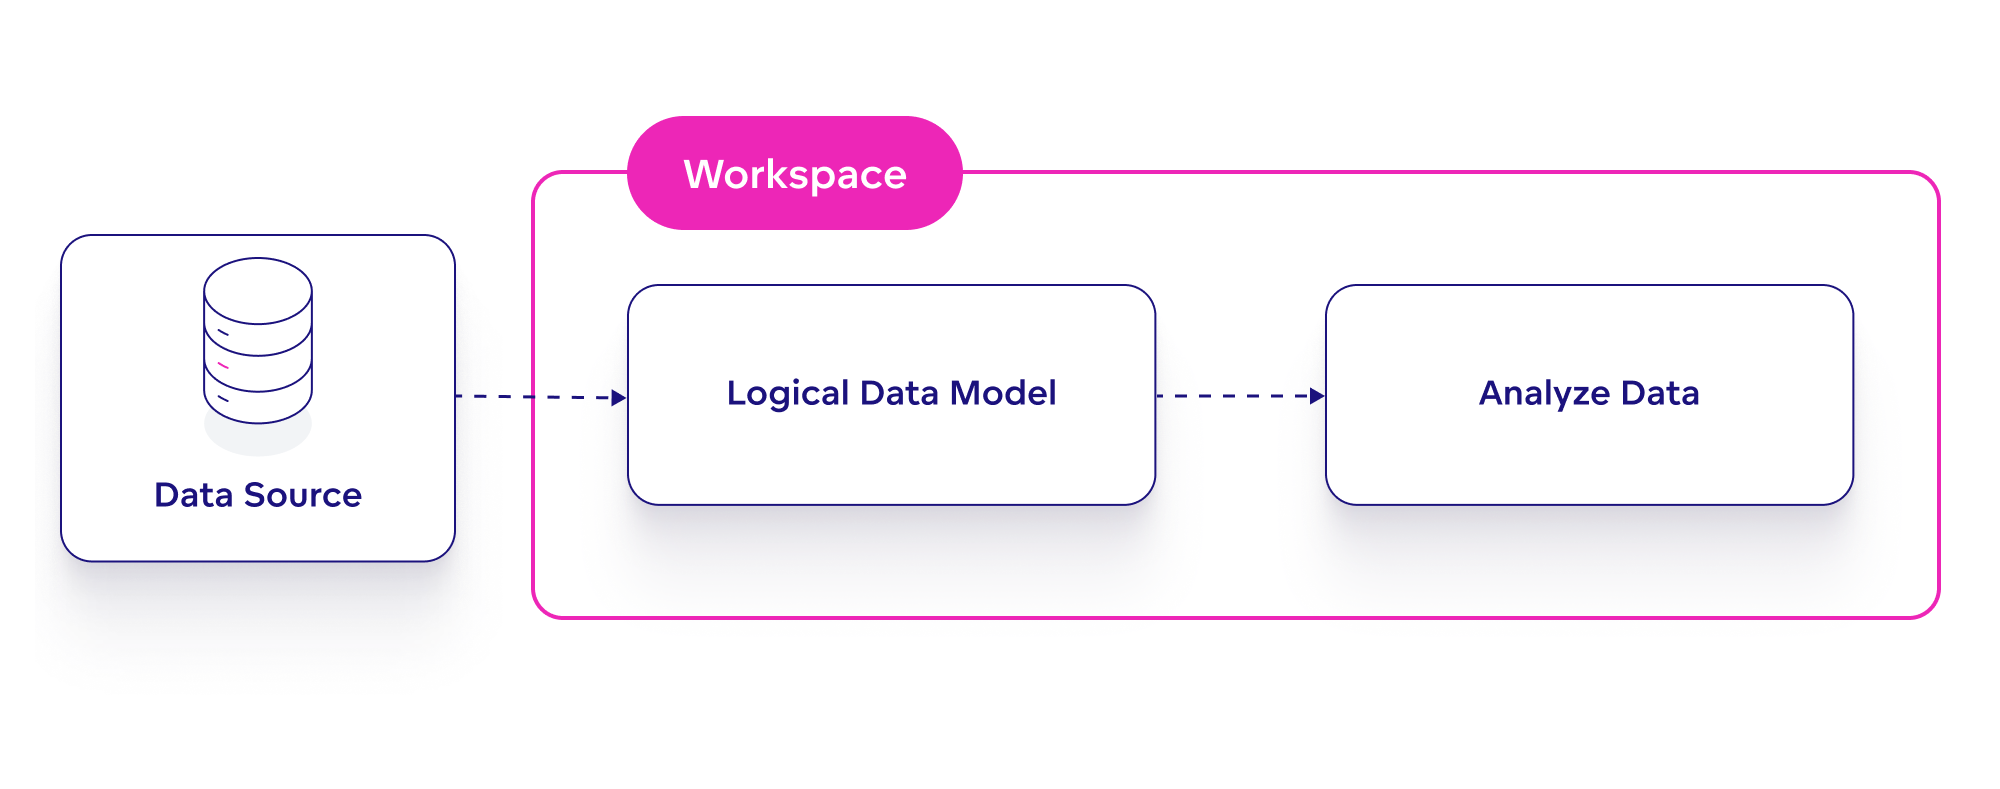 Logical Data Model Overview